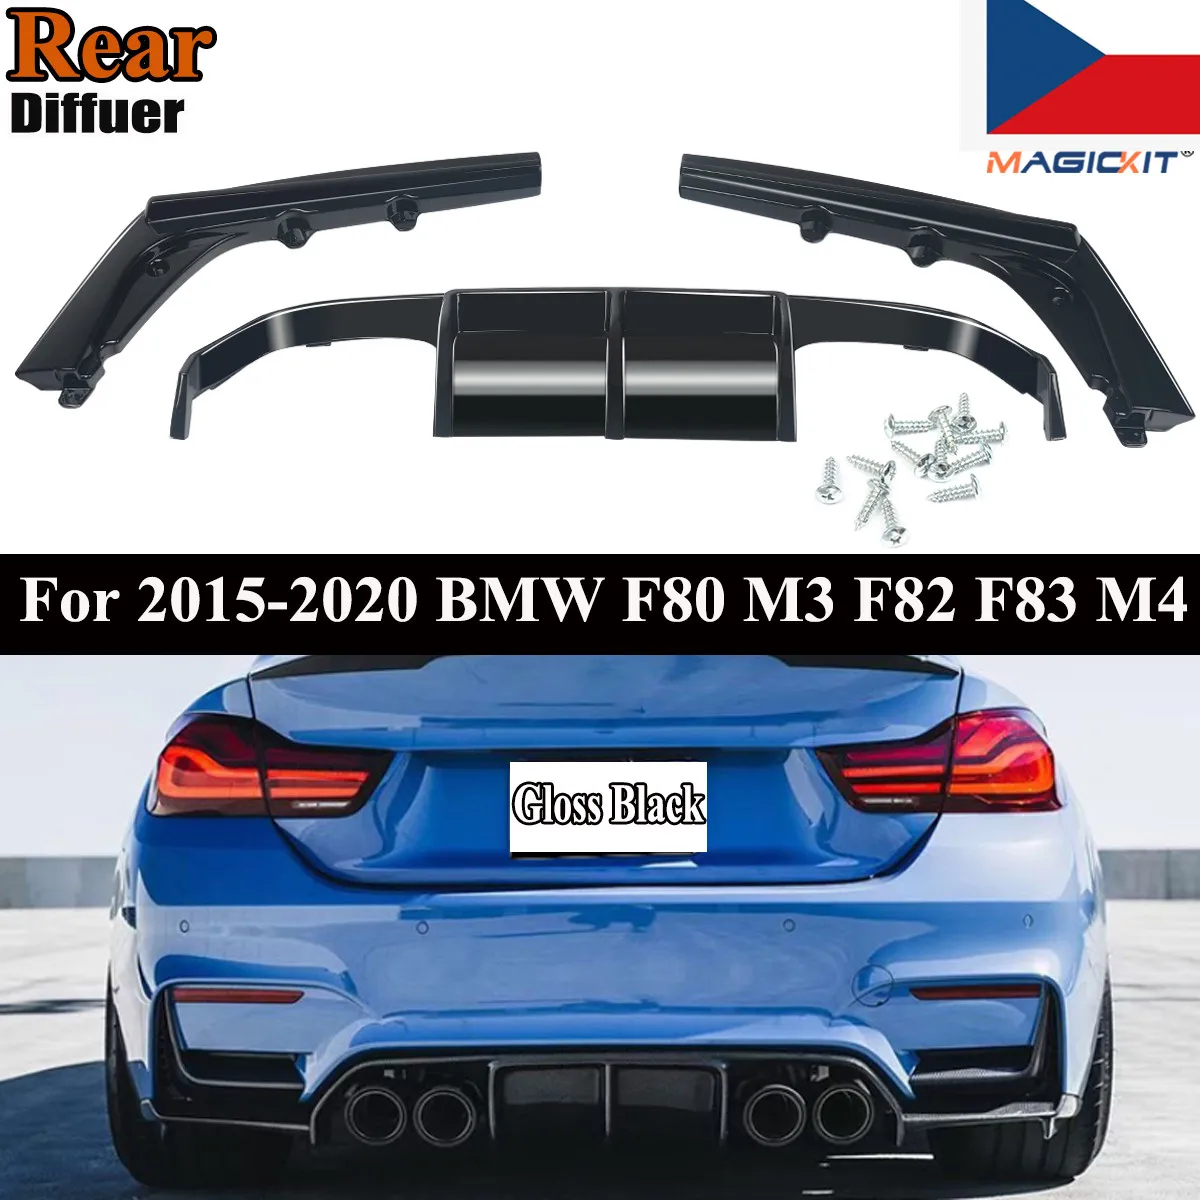 MagicKit For BMW F80 M3 F82 M4 2015-2020 PSM Style Gloss Black Rear Bumper Lip Diffuser